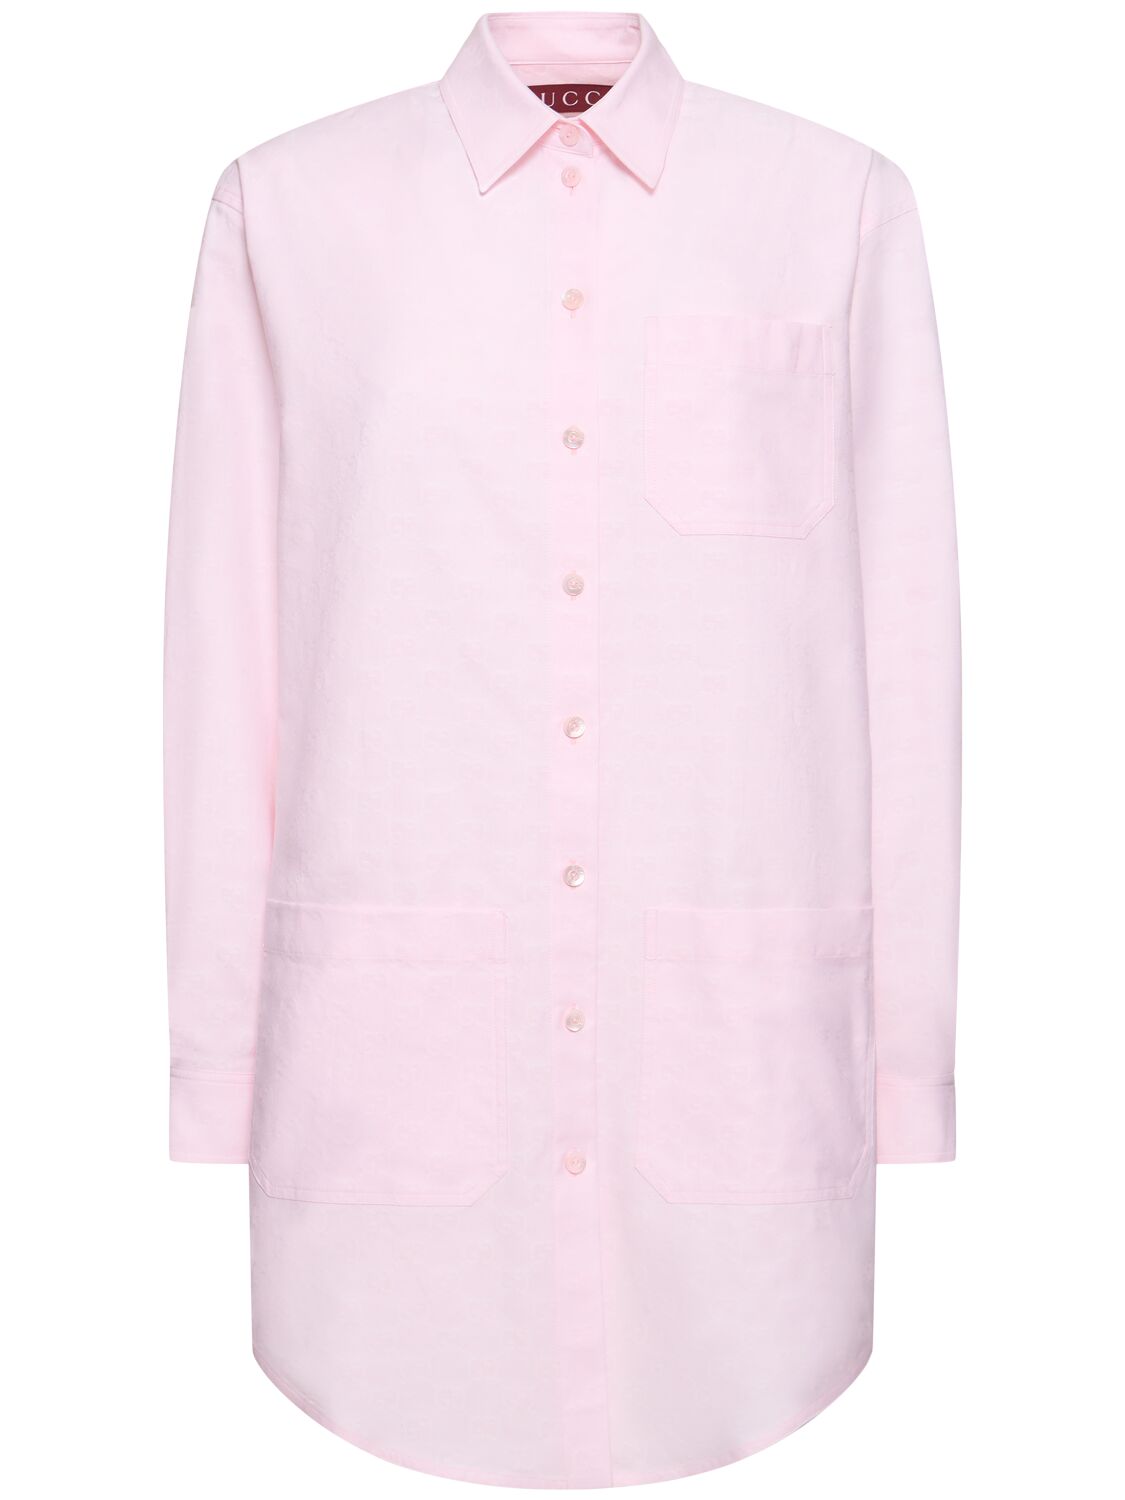 Gucci Gg Supreme Cotton Shirt In Pink